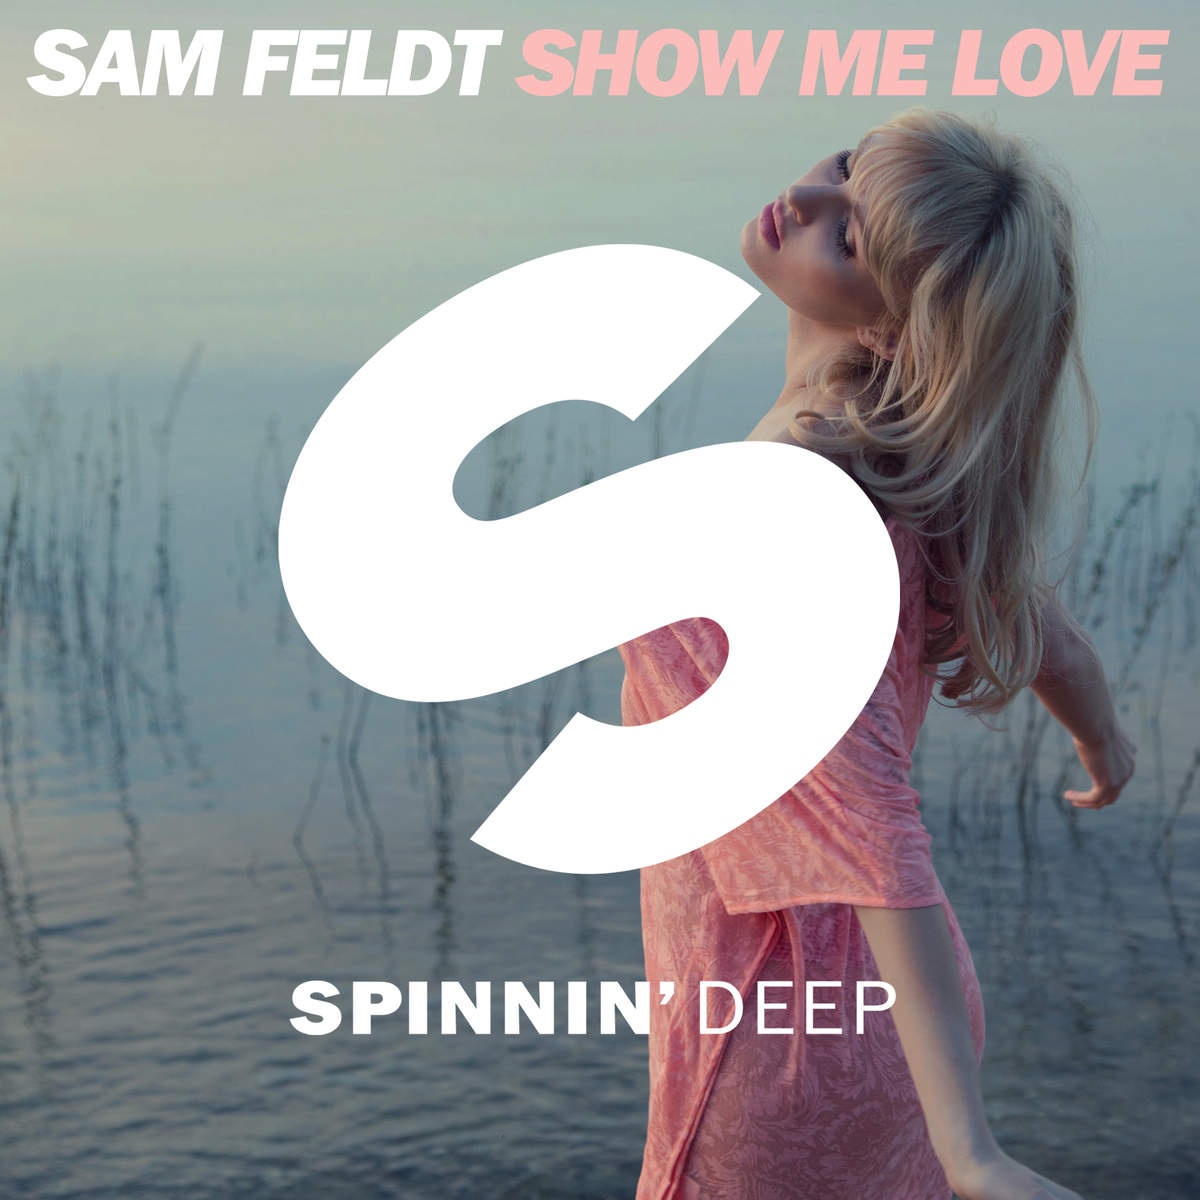 Show Me Love (Radio Edit)